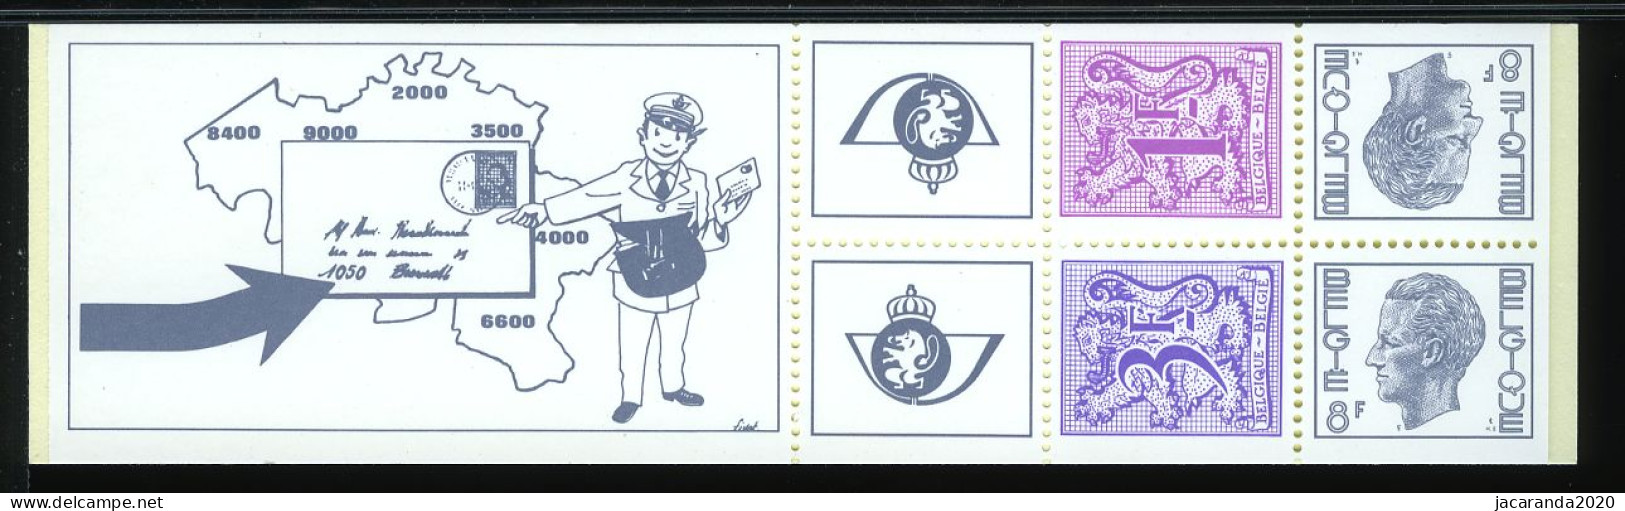 België B15 - Koning Boudewijn - Cijfer Op Heraldieke Leeuw - Roi Baudouin - Chiffre Sur Lion Héraldique - 1978 - 1953-2006 Modern [B]